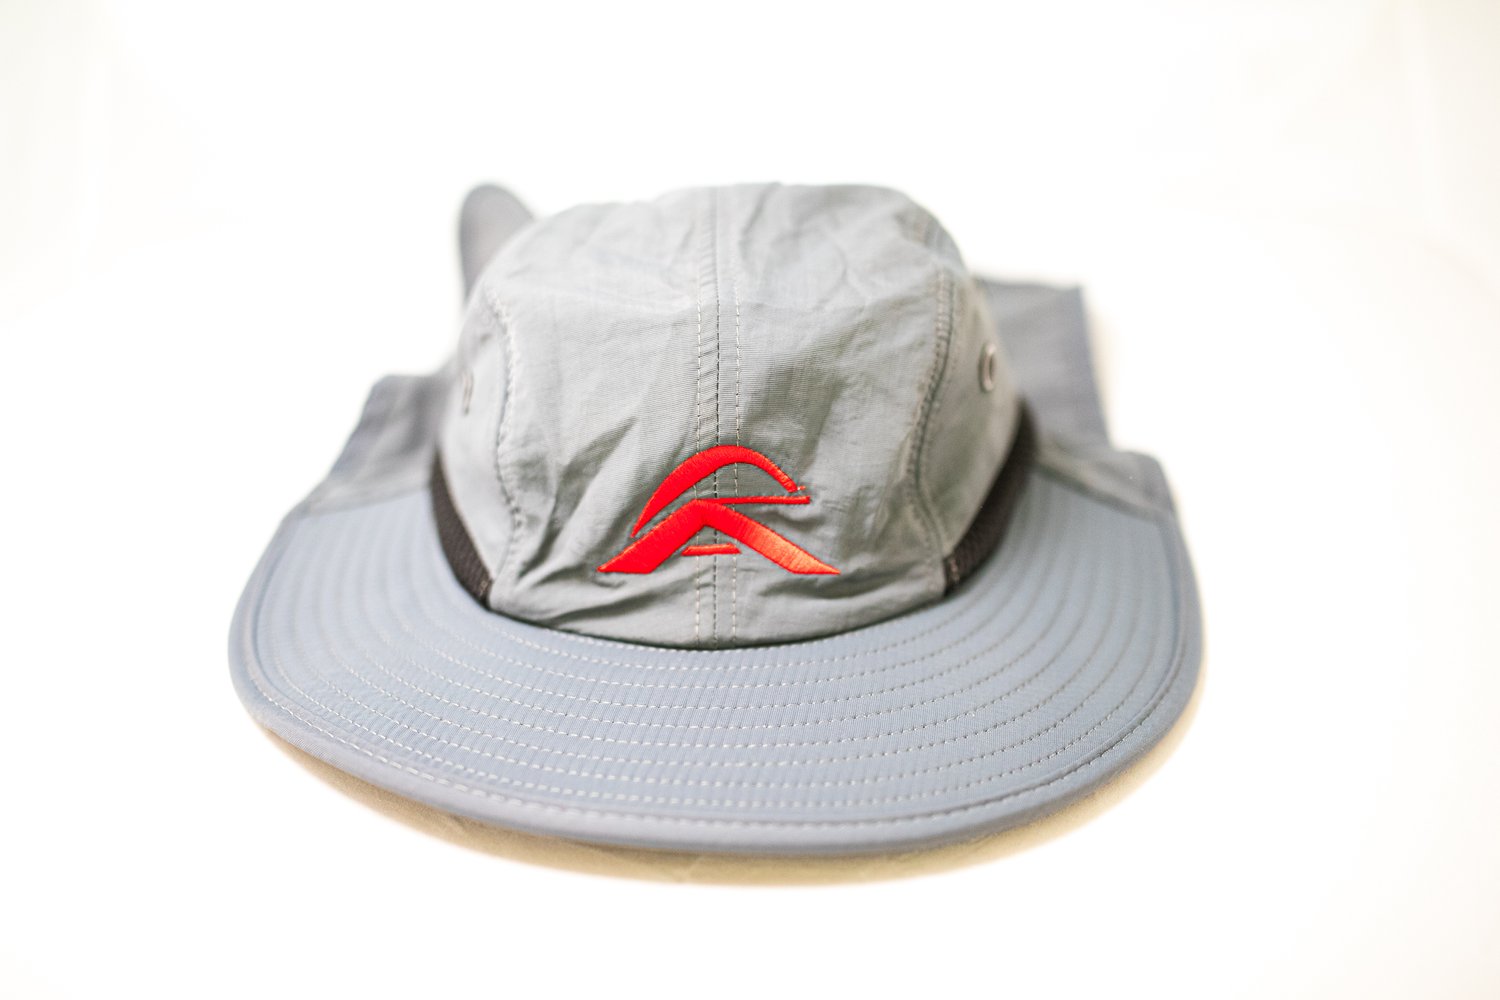 Sun Hat with Back Flap - Fishing / Sun Runner / Cape / Hiking